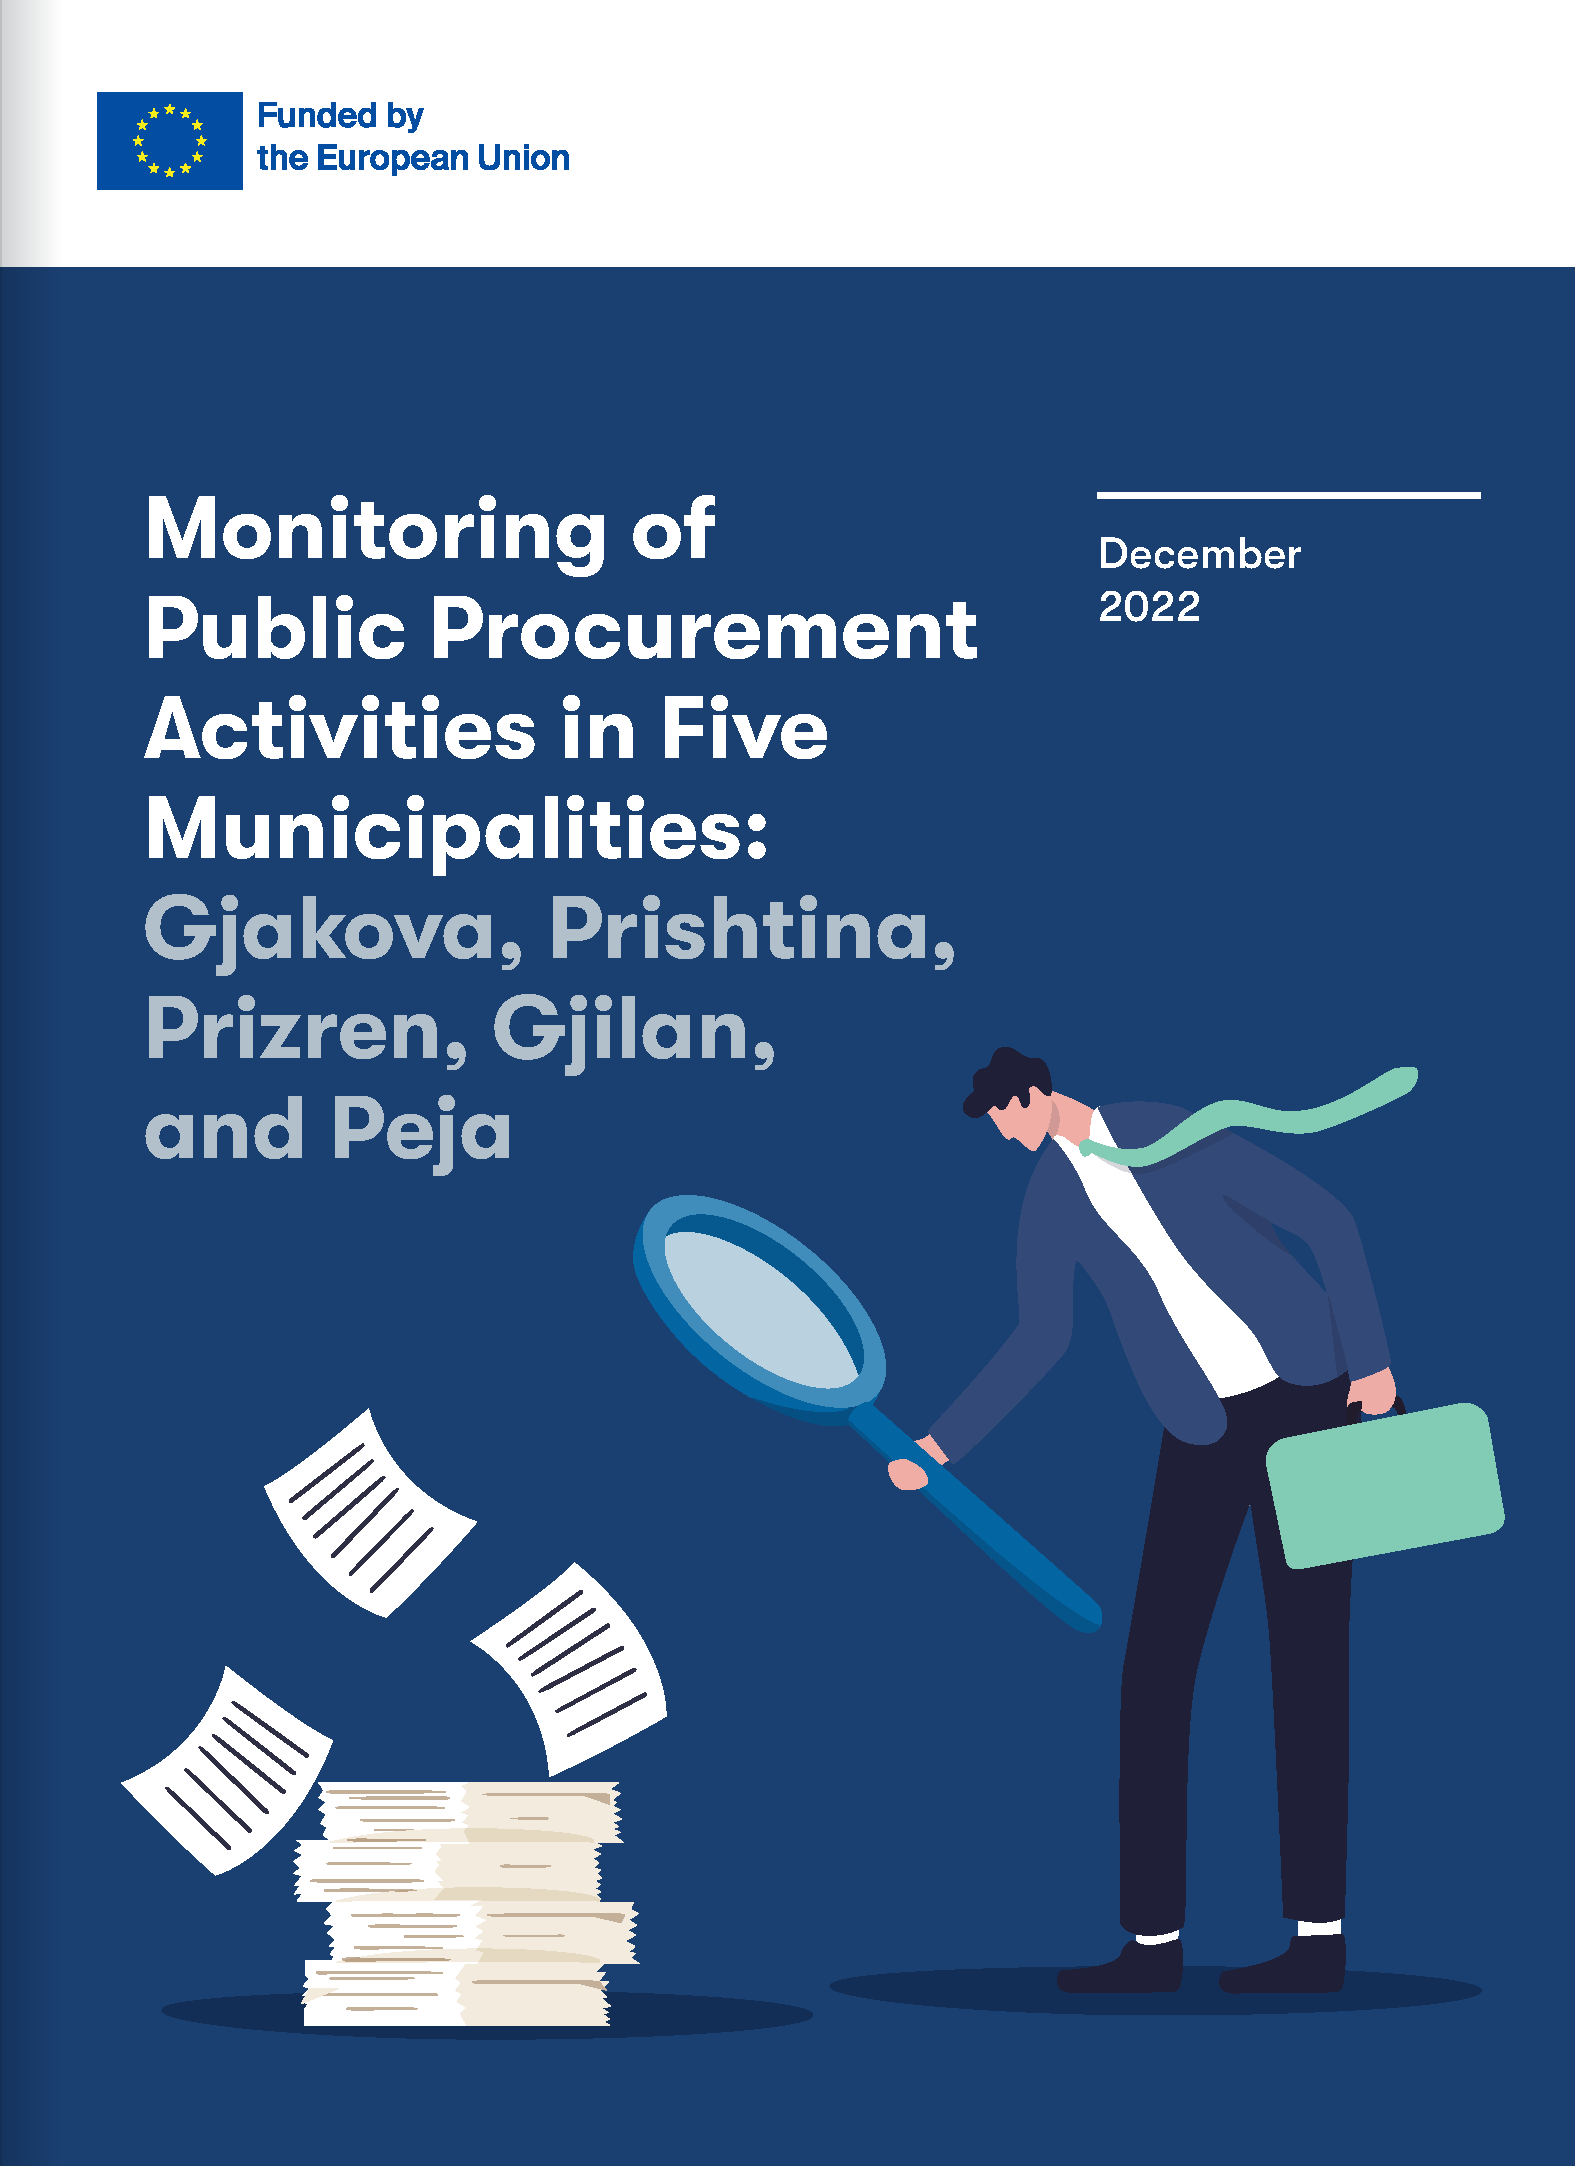 Monitoring of Public Procurement Activities in Five Municipalities: Gjakova, Prishtina, Prizren, Gjilan, and Peja